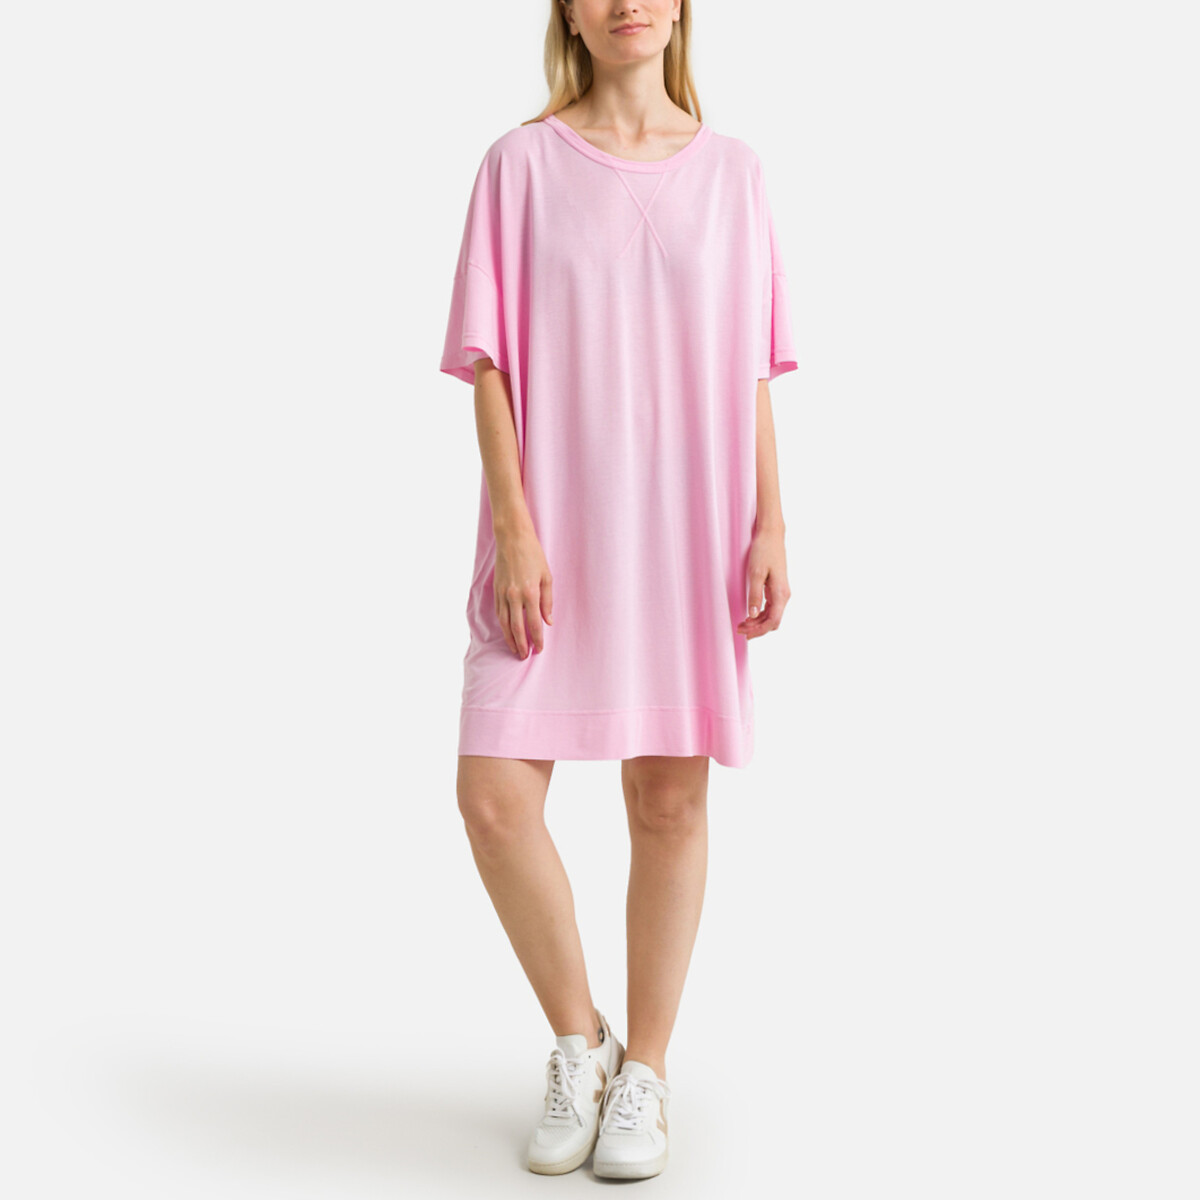 Прямое Платье-майка короткие рукава TUKYBAY XS/S розовый LaRedoute, размер XS/S Прямое Платье-майка короткие рукава TUKYBAY XS/S розовый - фото 2